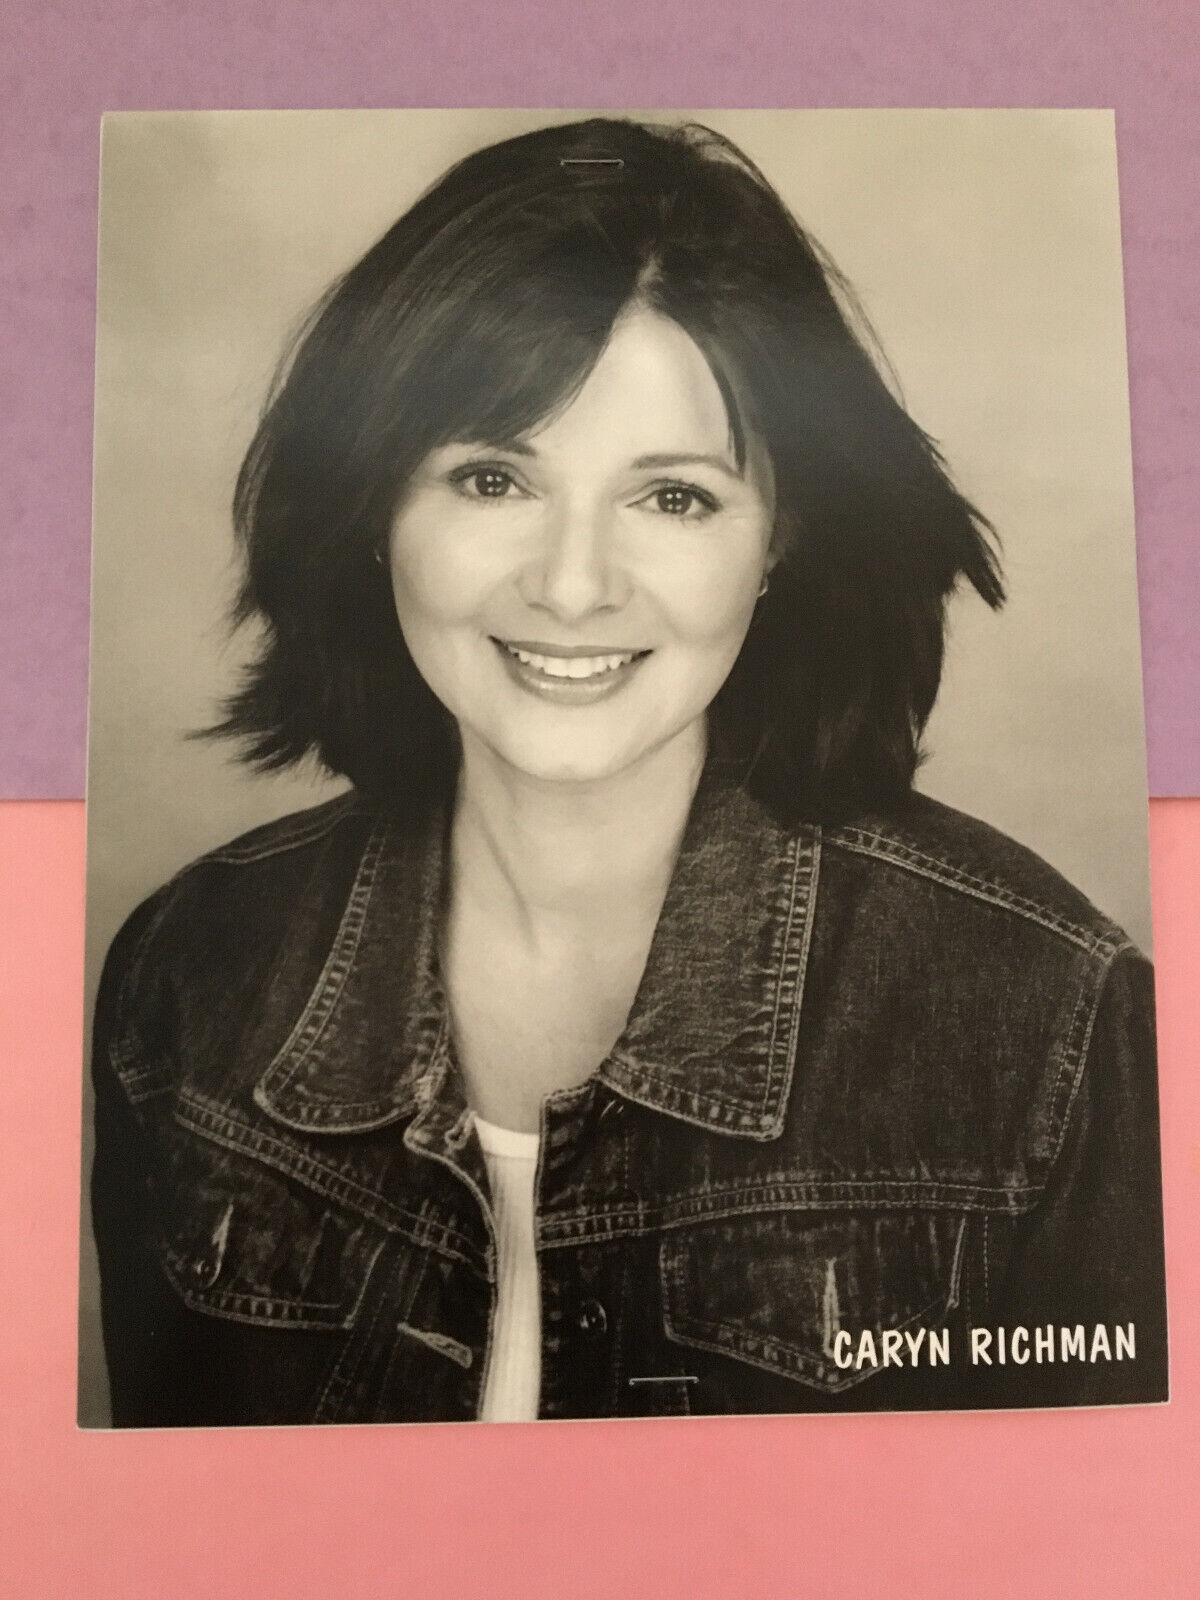 Caryn Richman #2 , original talent agency headshot photo with credits